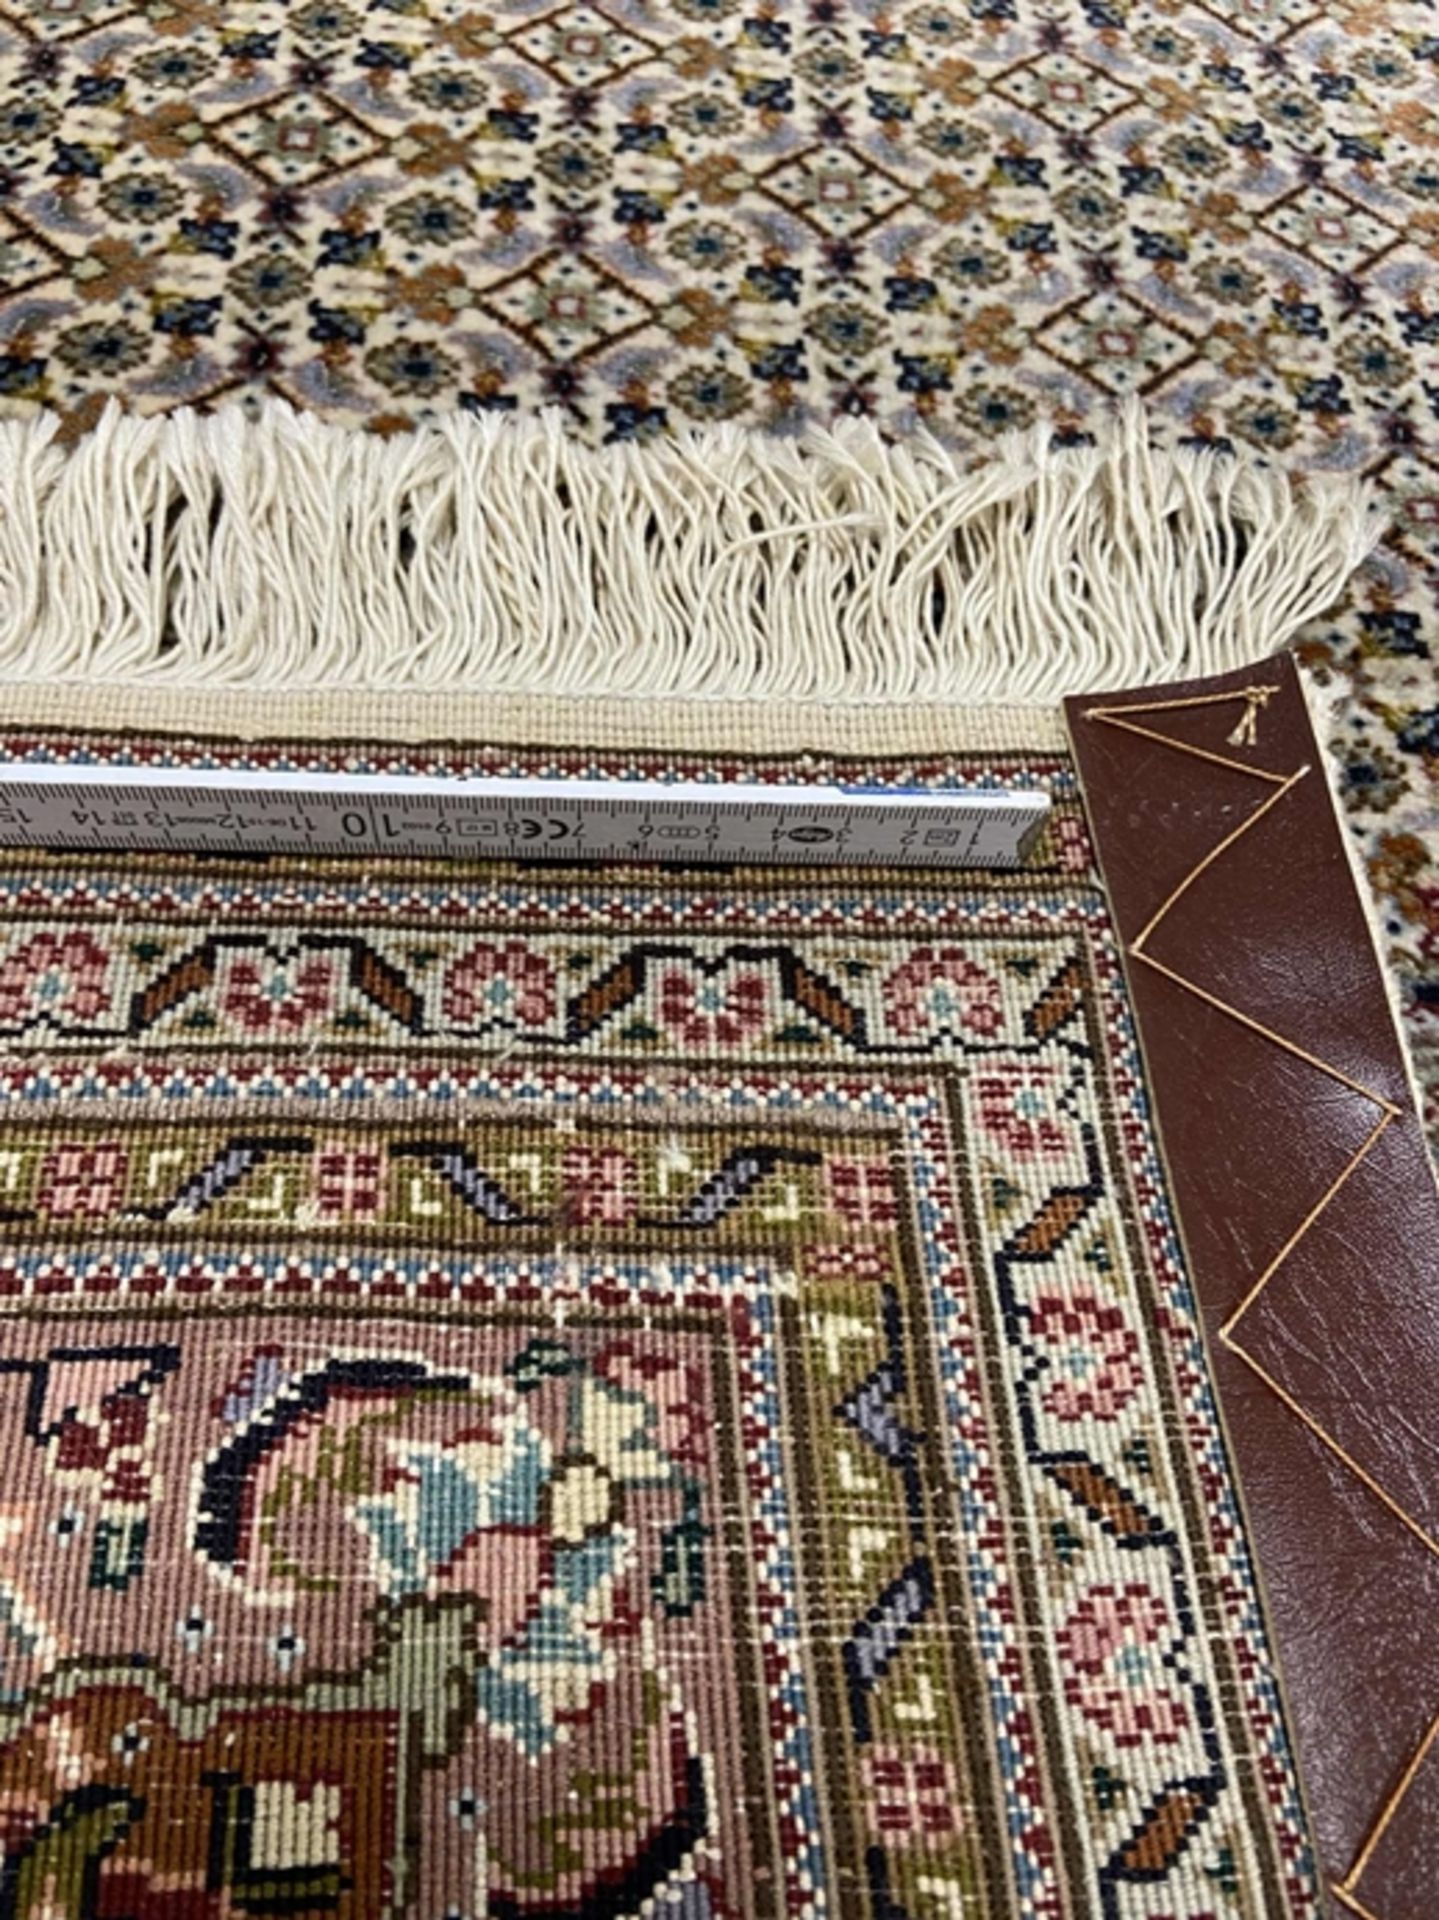 Tabriz Persian carpet, cork wool with silk, 50 Raj - 300 x 200cm - Image 4 of 5